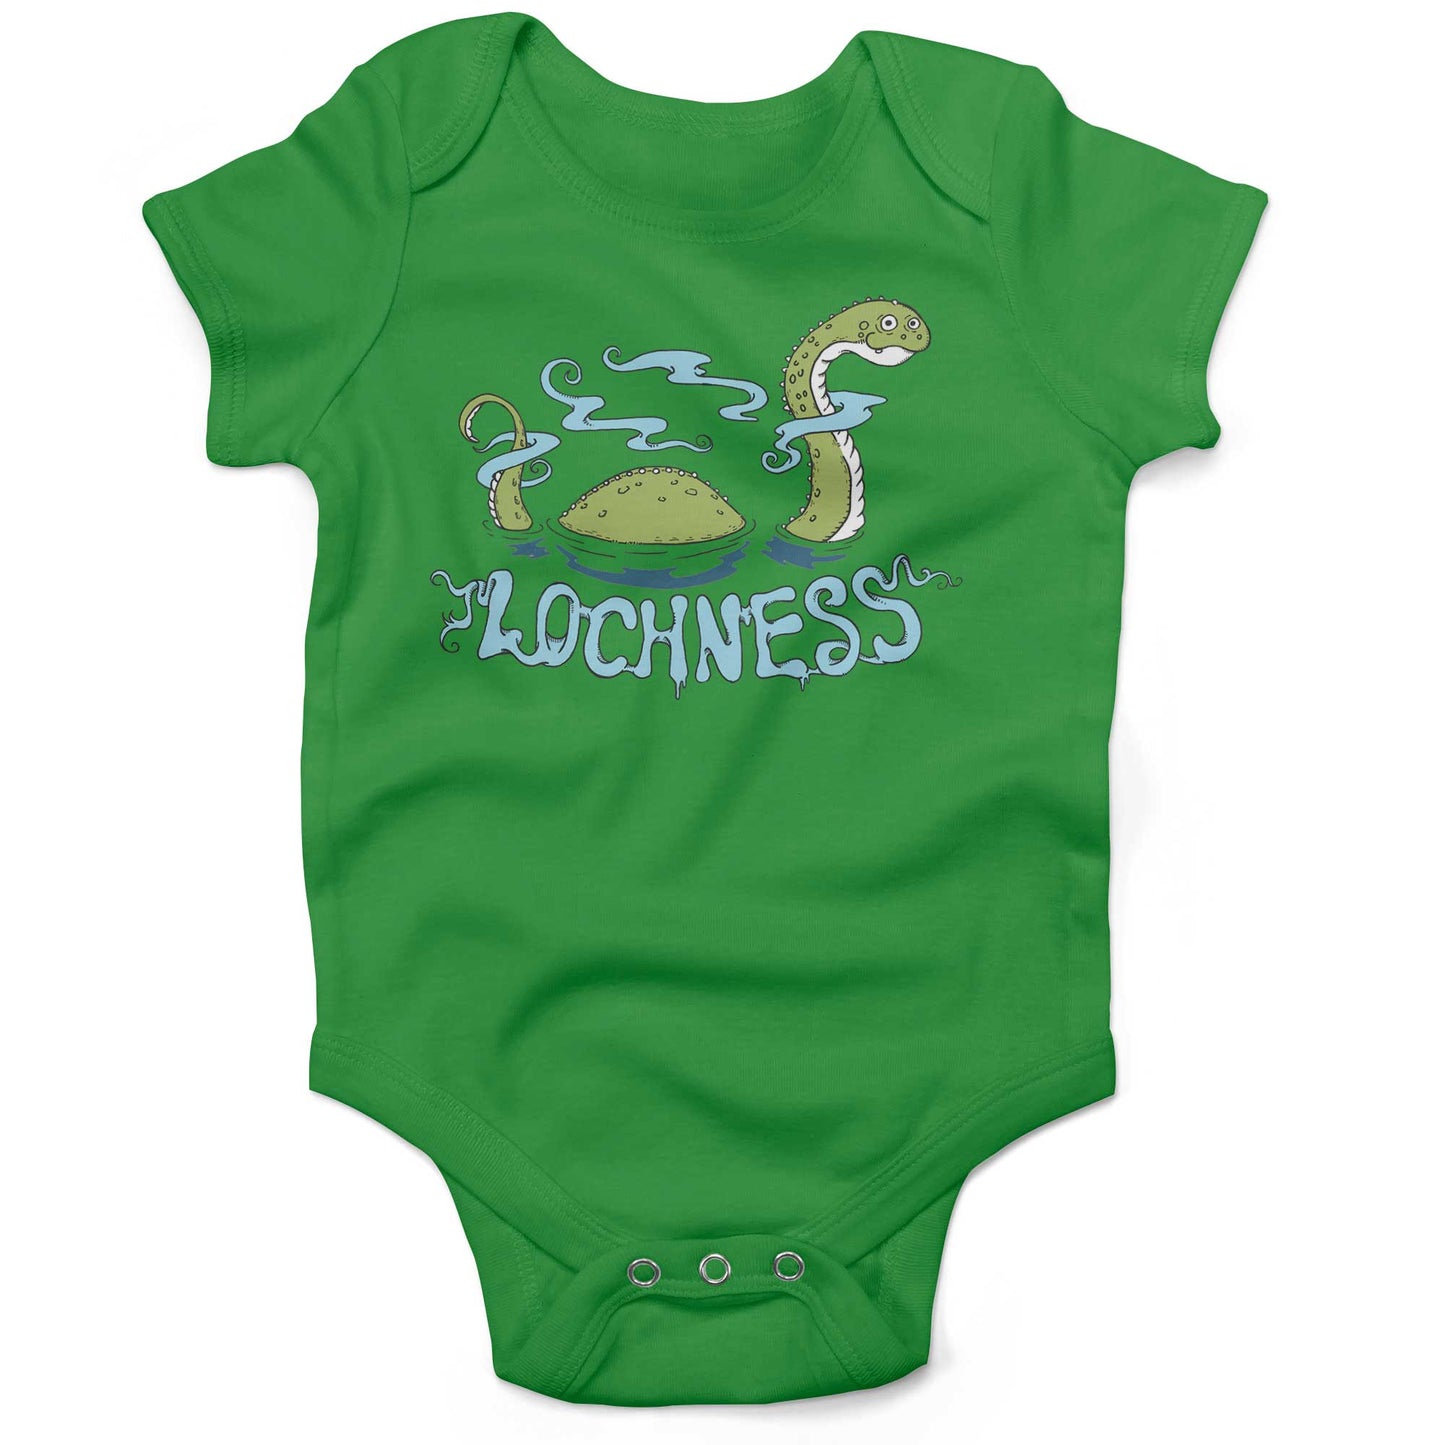 Loch Ness Monster Infant Bodysuit or Raglan Baby Tee-Grass Green-3-6 months